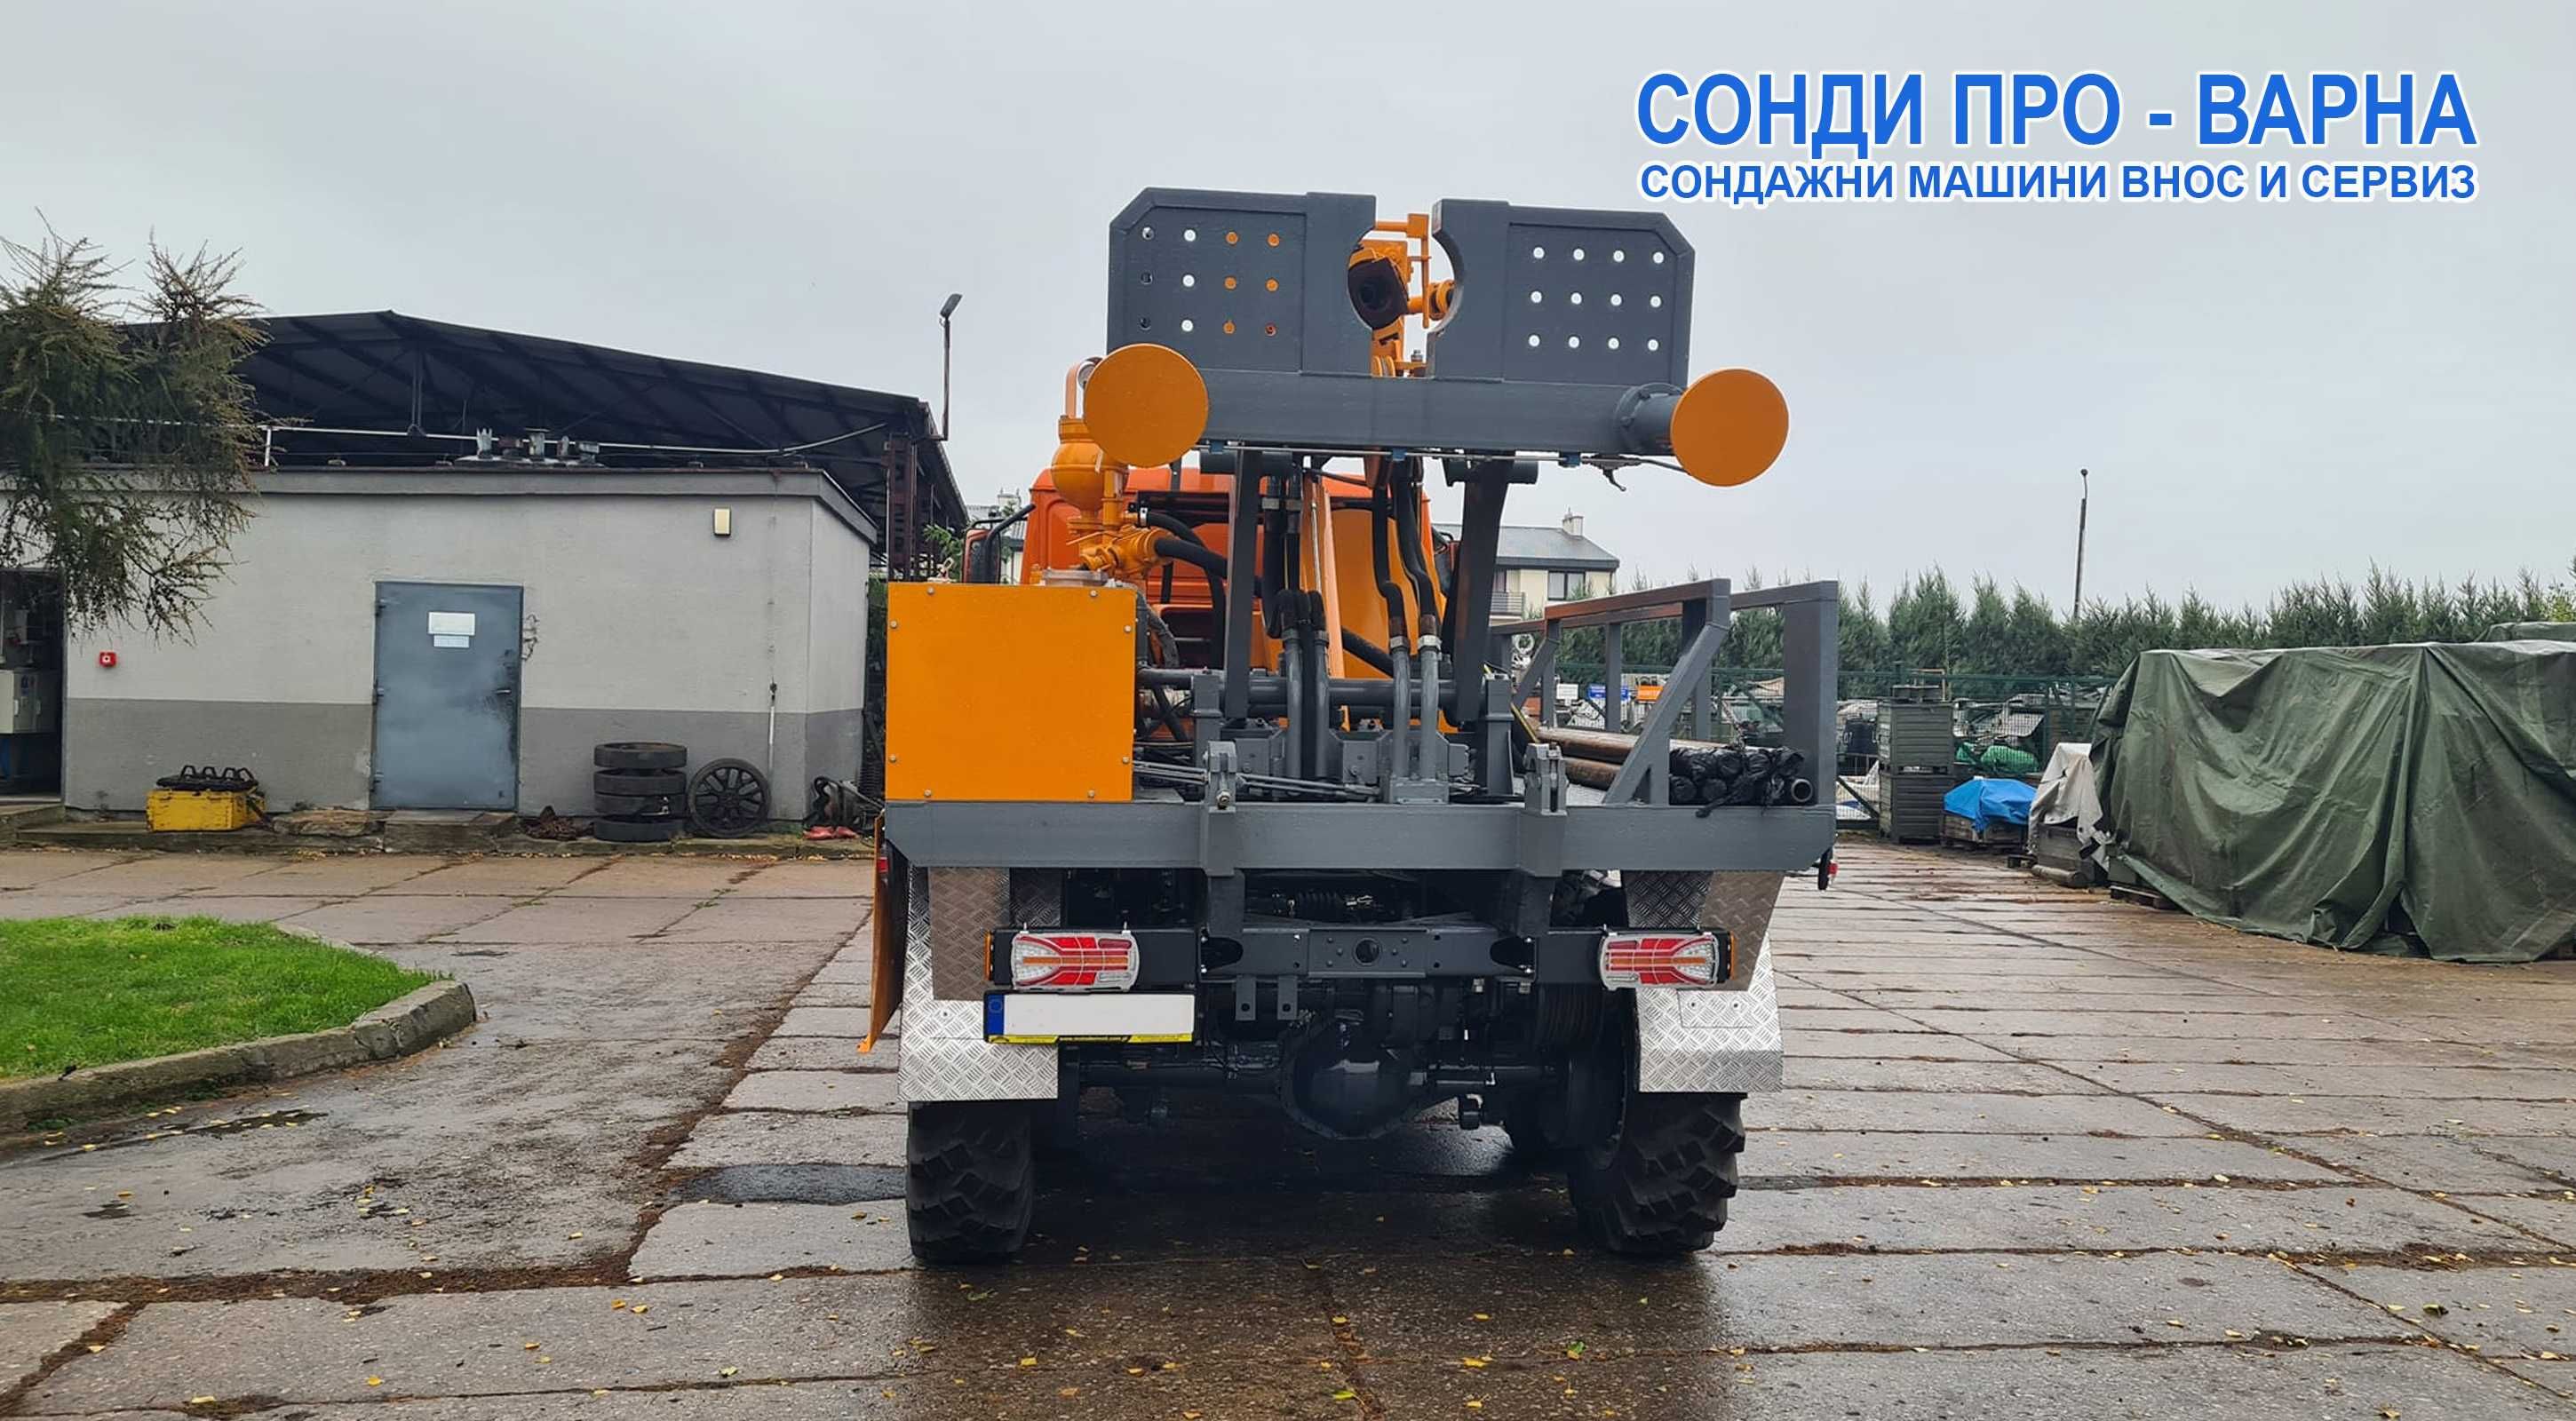 Нов Man Евро 2 6x6 - Сондажна машина Ural-300EC до 300 метра от Европа